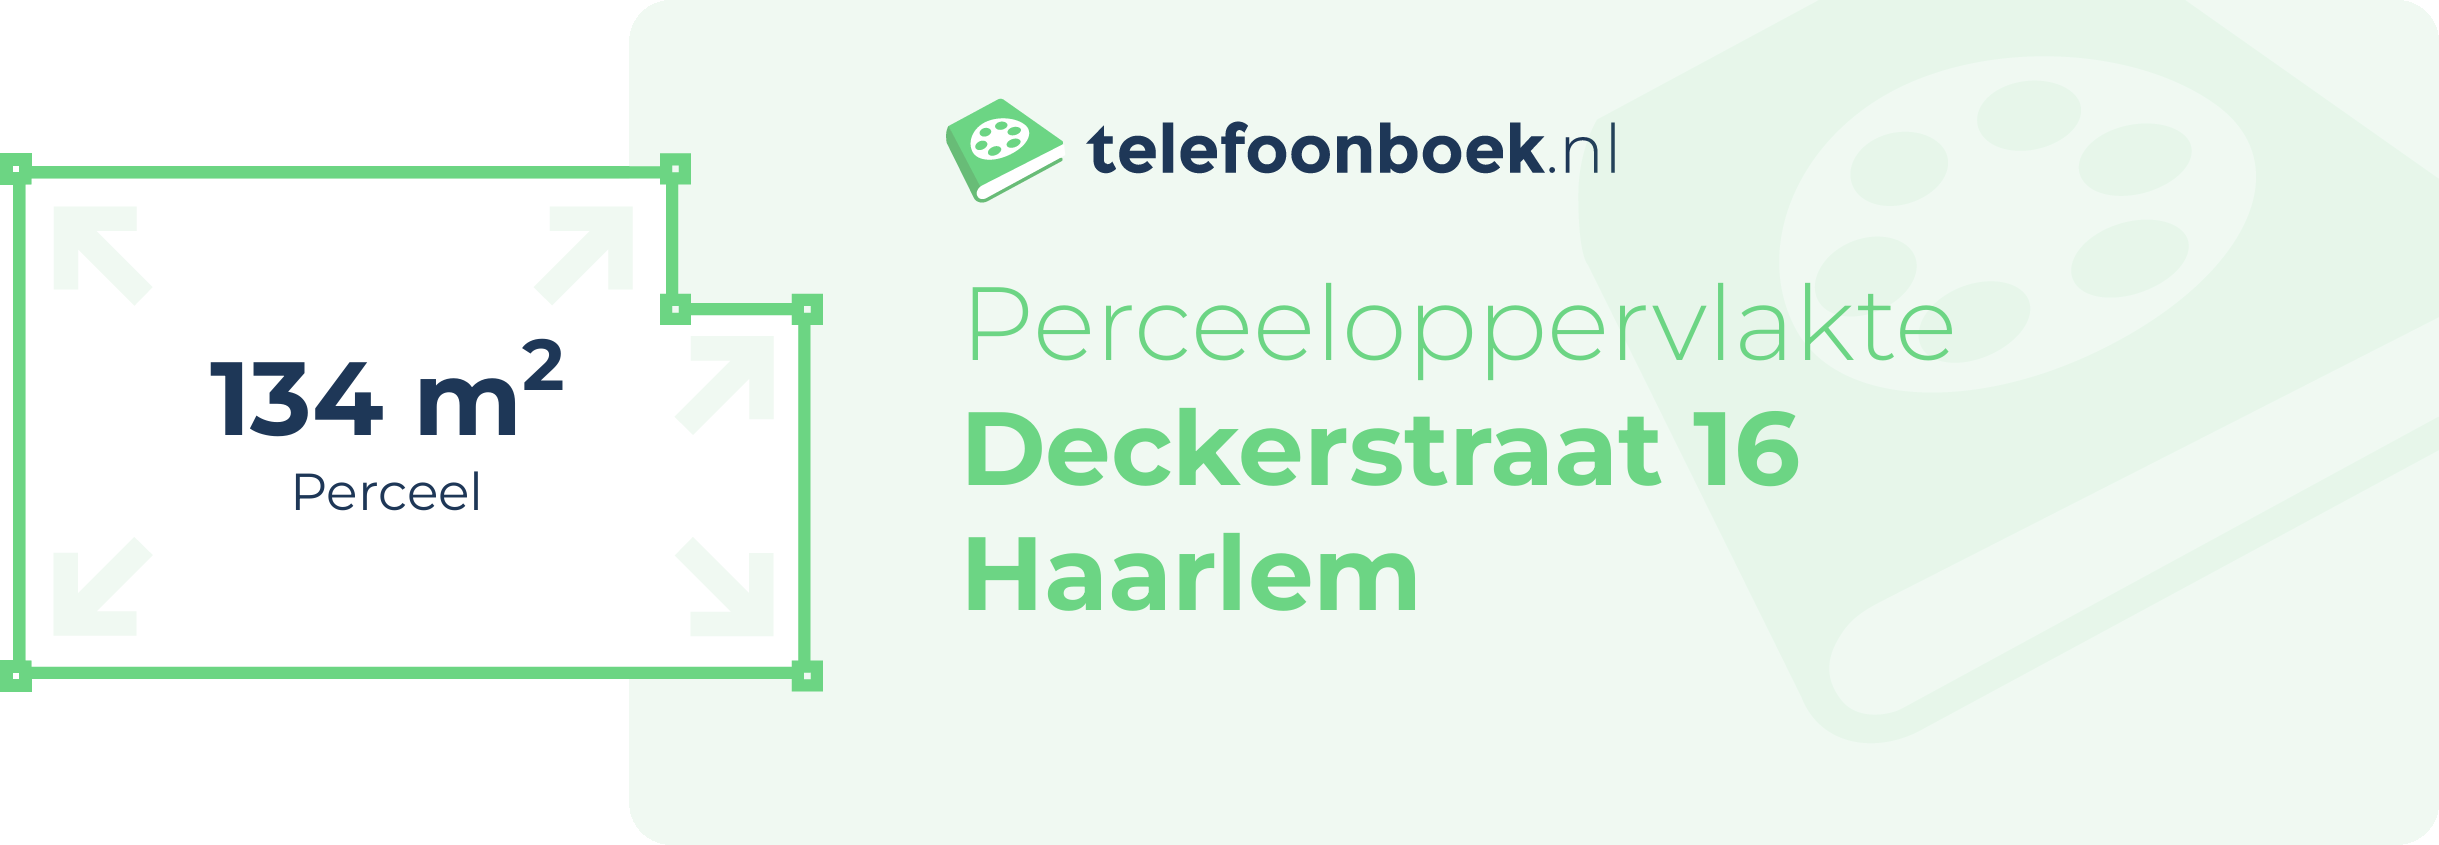 Perceeloppervlakte Deckerstraat 16 Haarlem